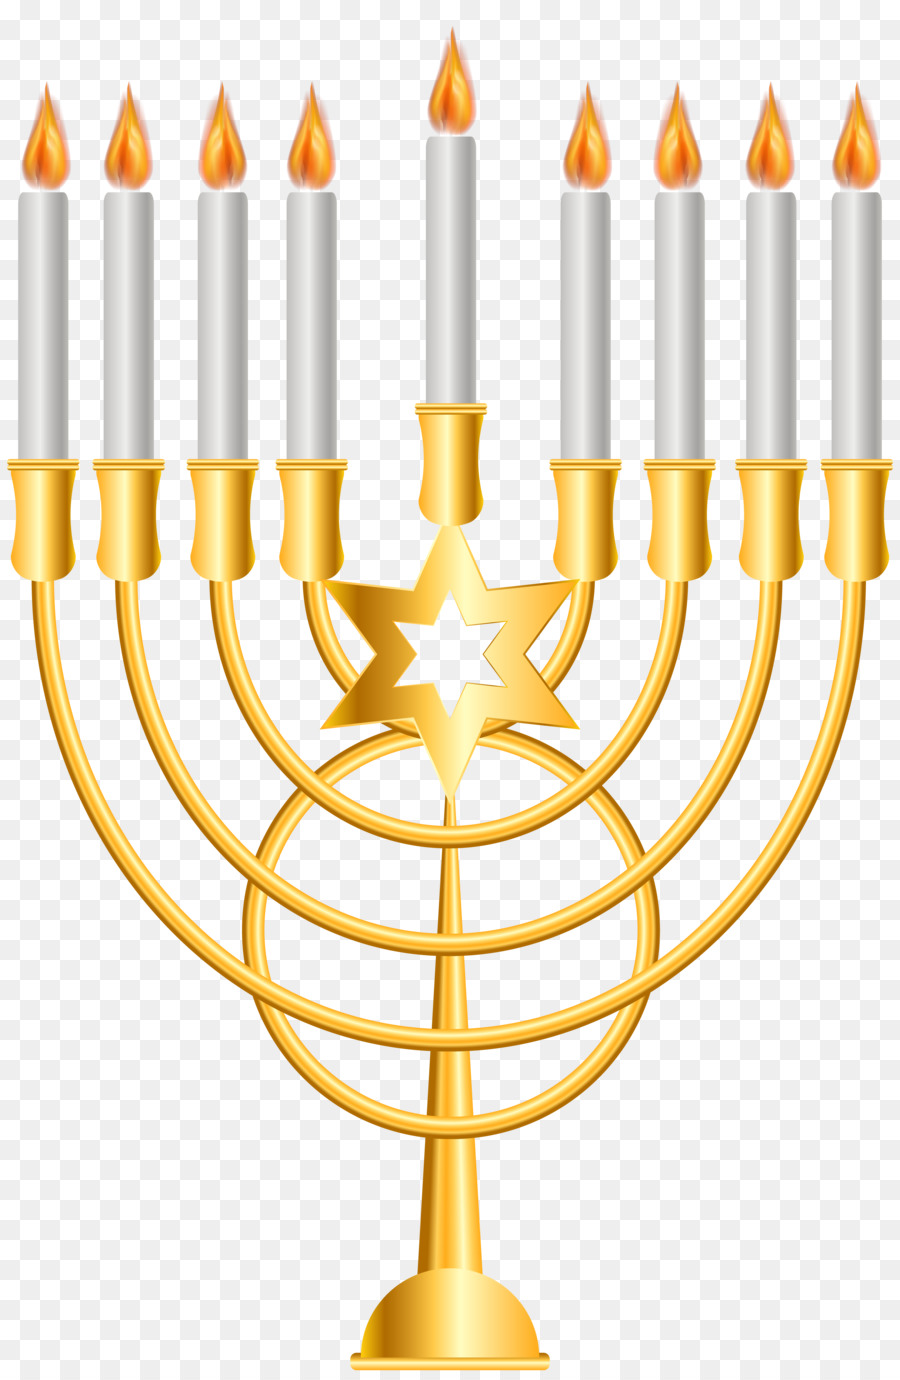 Lễ kỷ niệm: Hanukkah Menorah Do Thái giáo Hình ảnh Dreidel - Do thái giáo